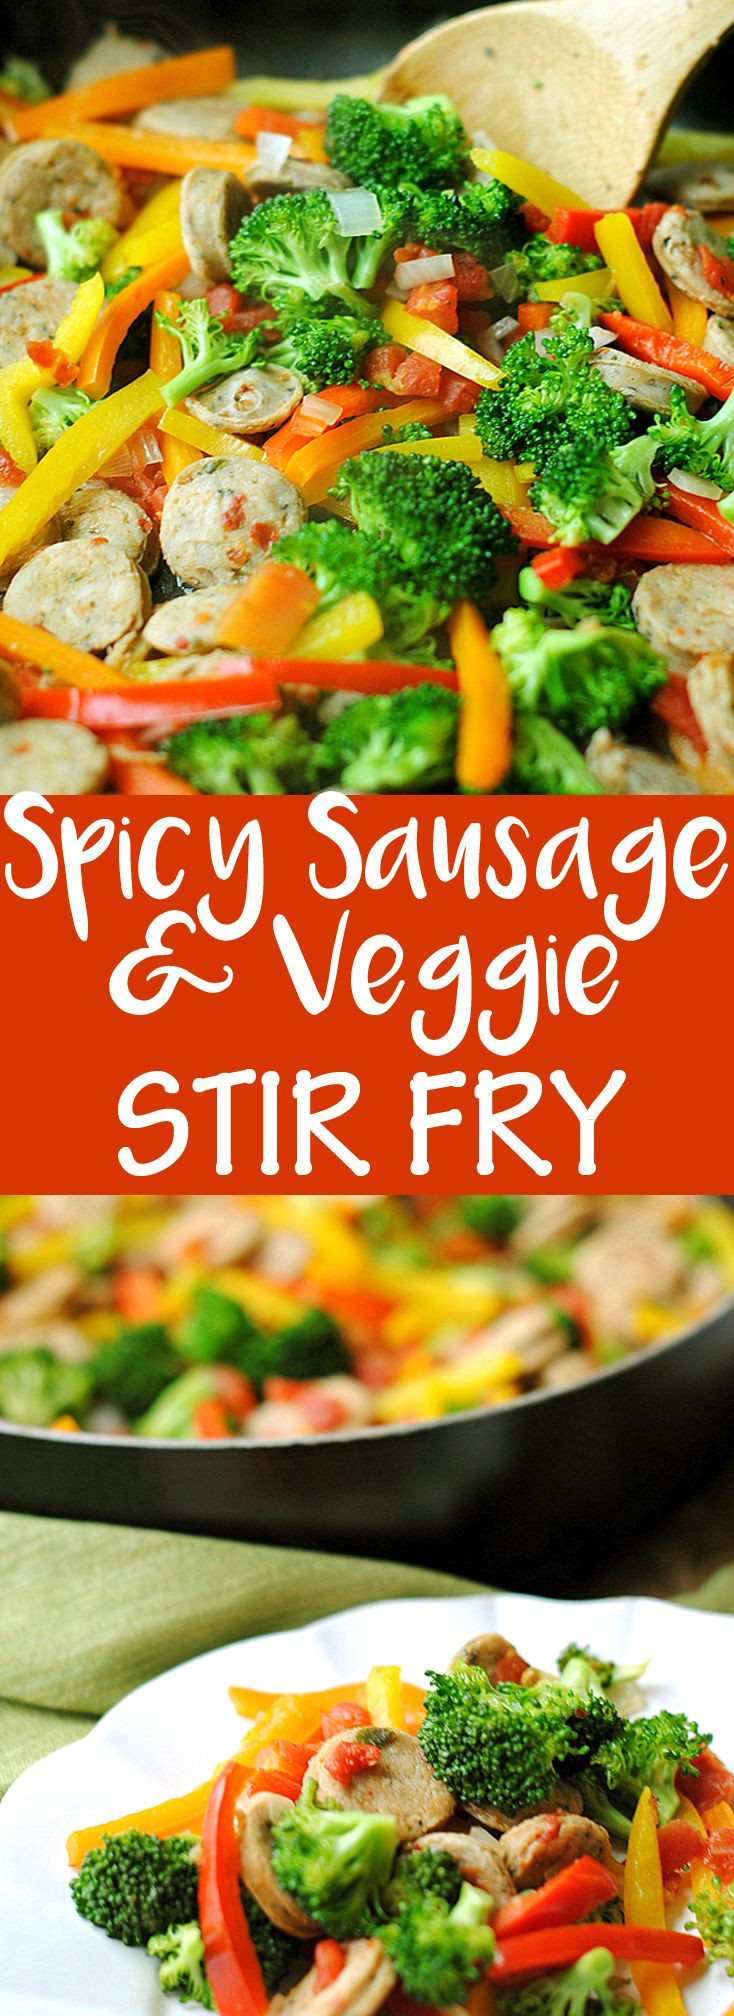 Turkey Sausage Stir Fry
 The top 22 Ideas About Turkey Sausage Stir Fry Best